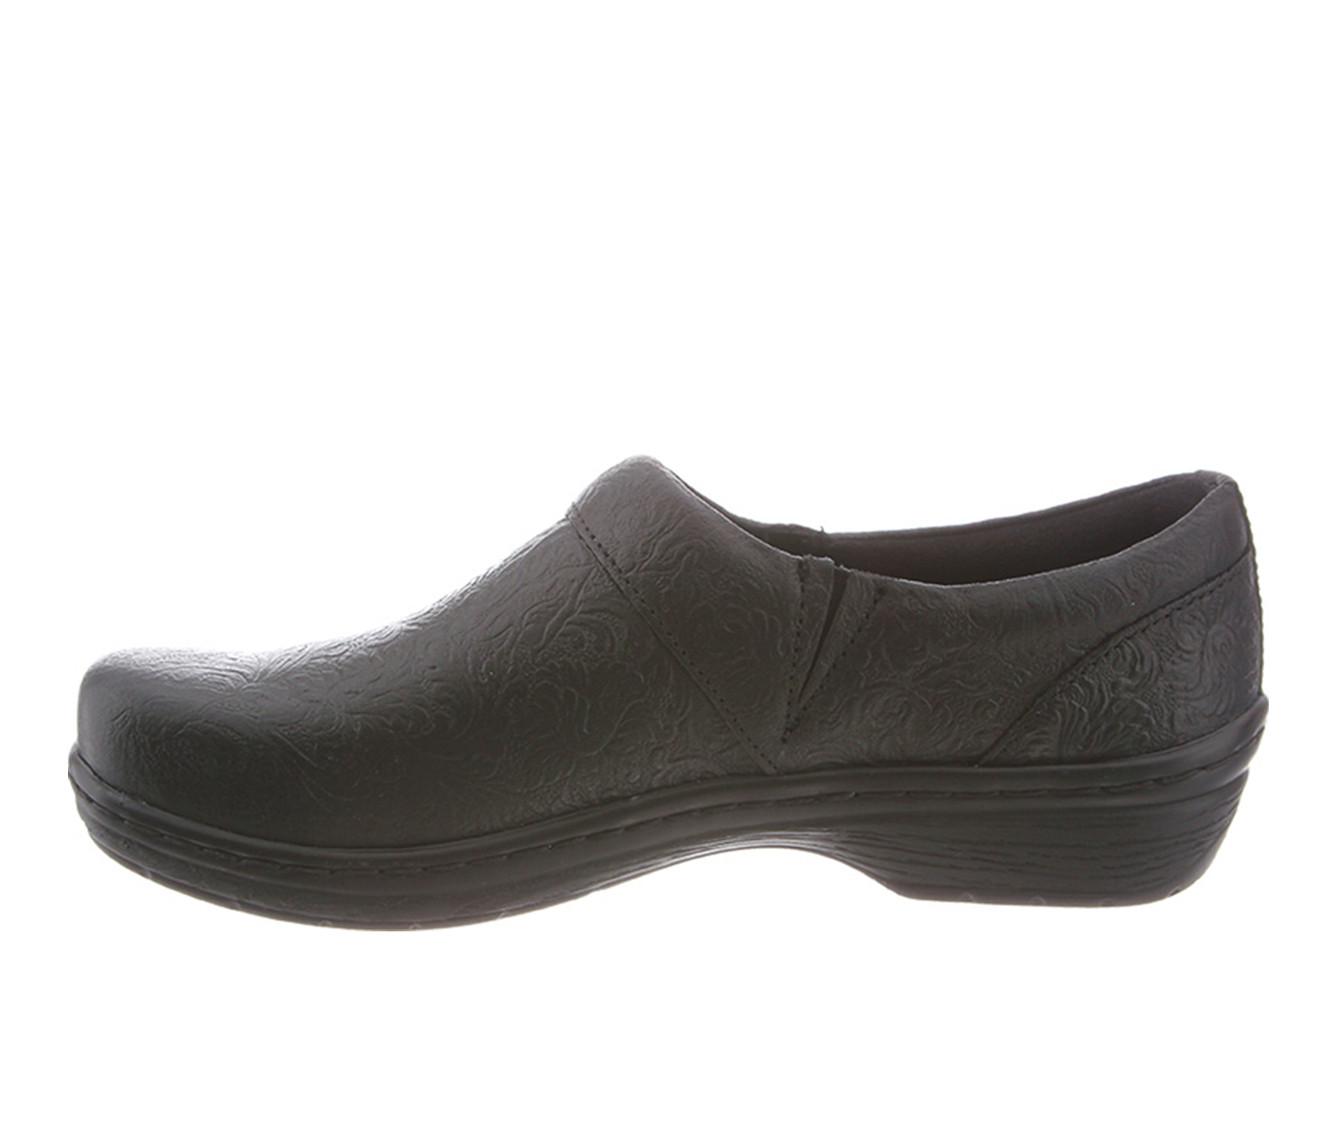 Women's KLOGS Footwear Mission Slip Resistant Shoes